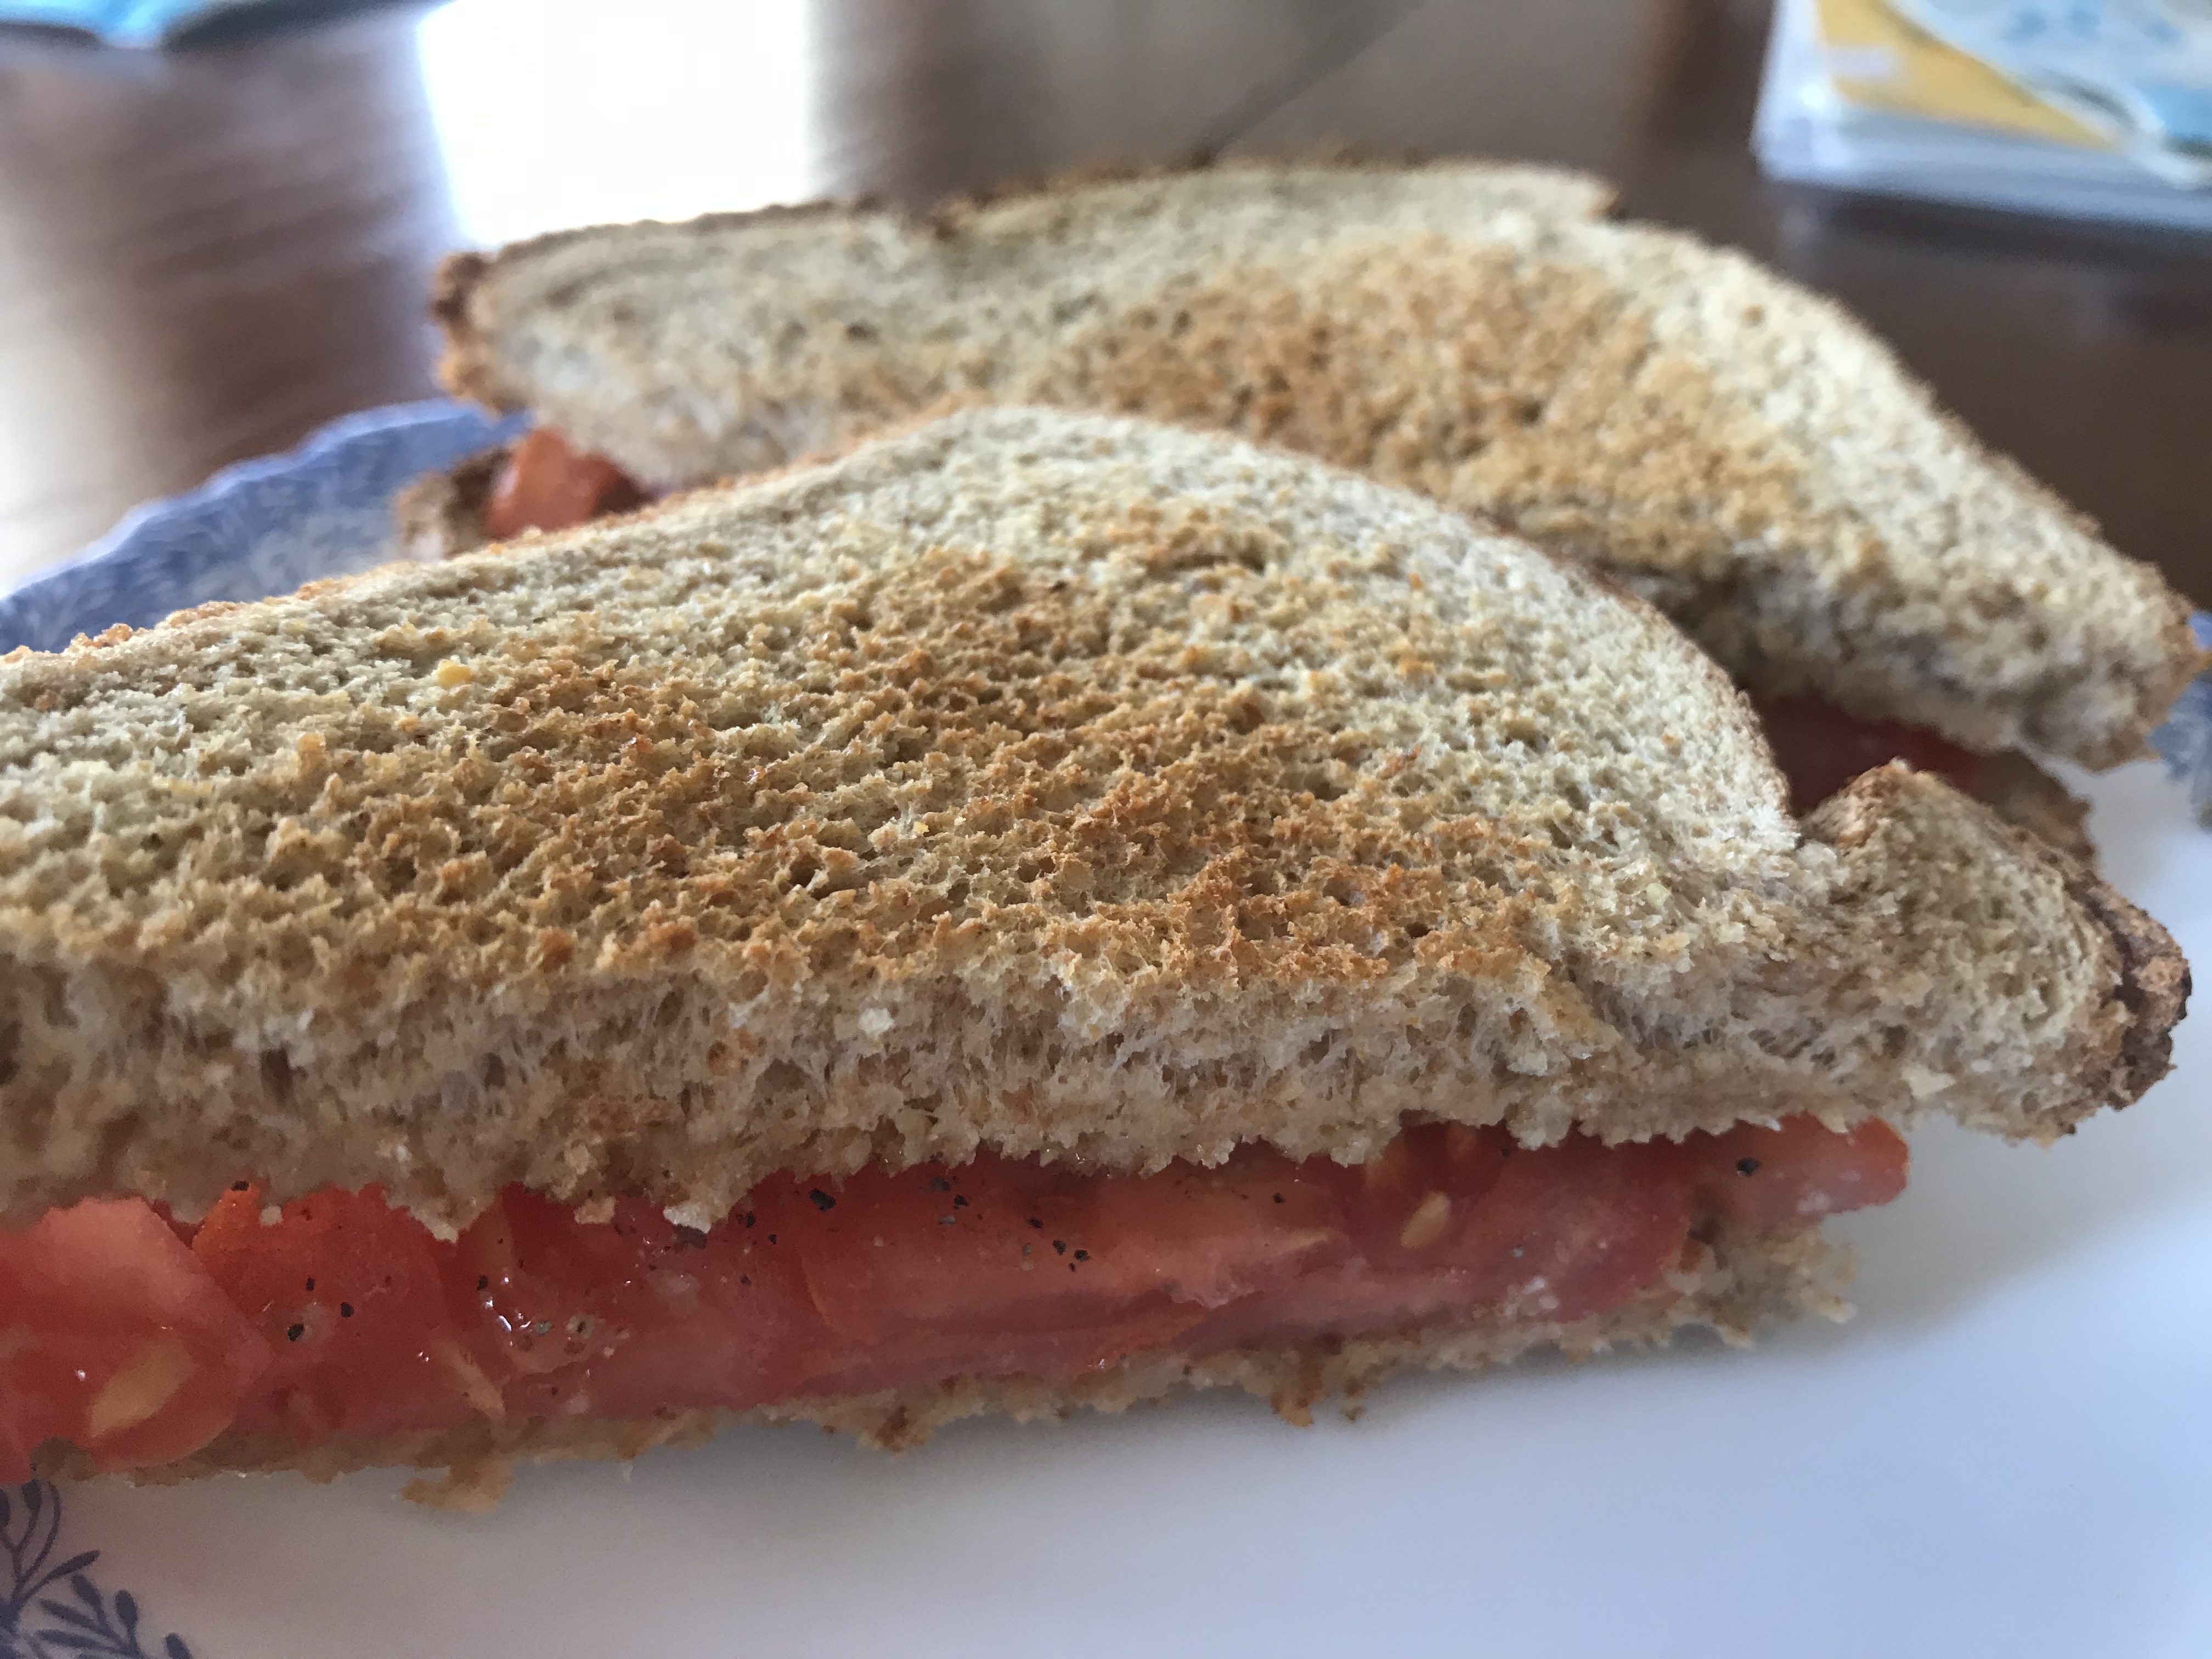 toast and tomato sandwich